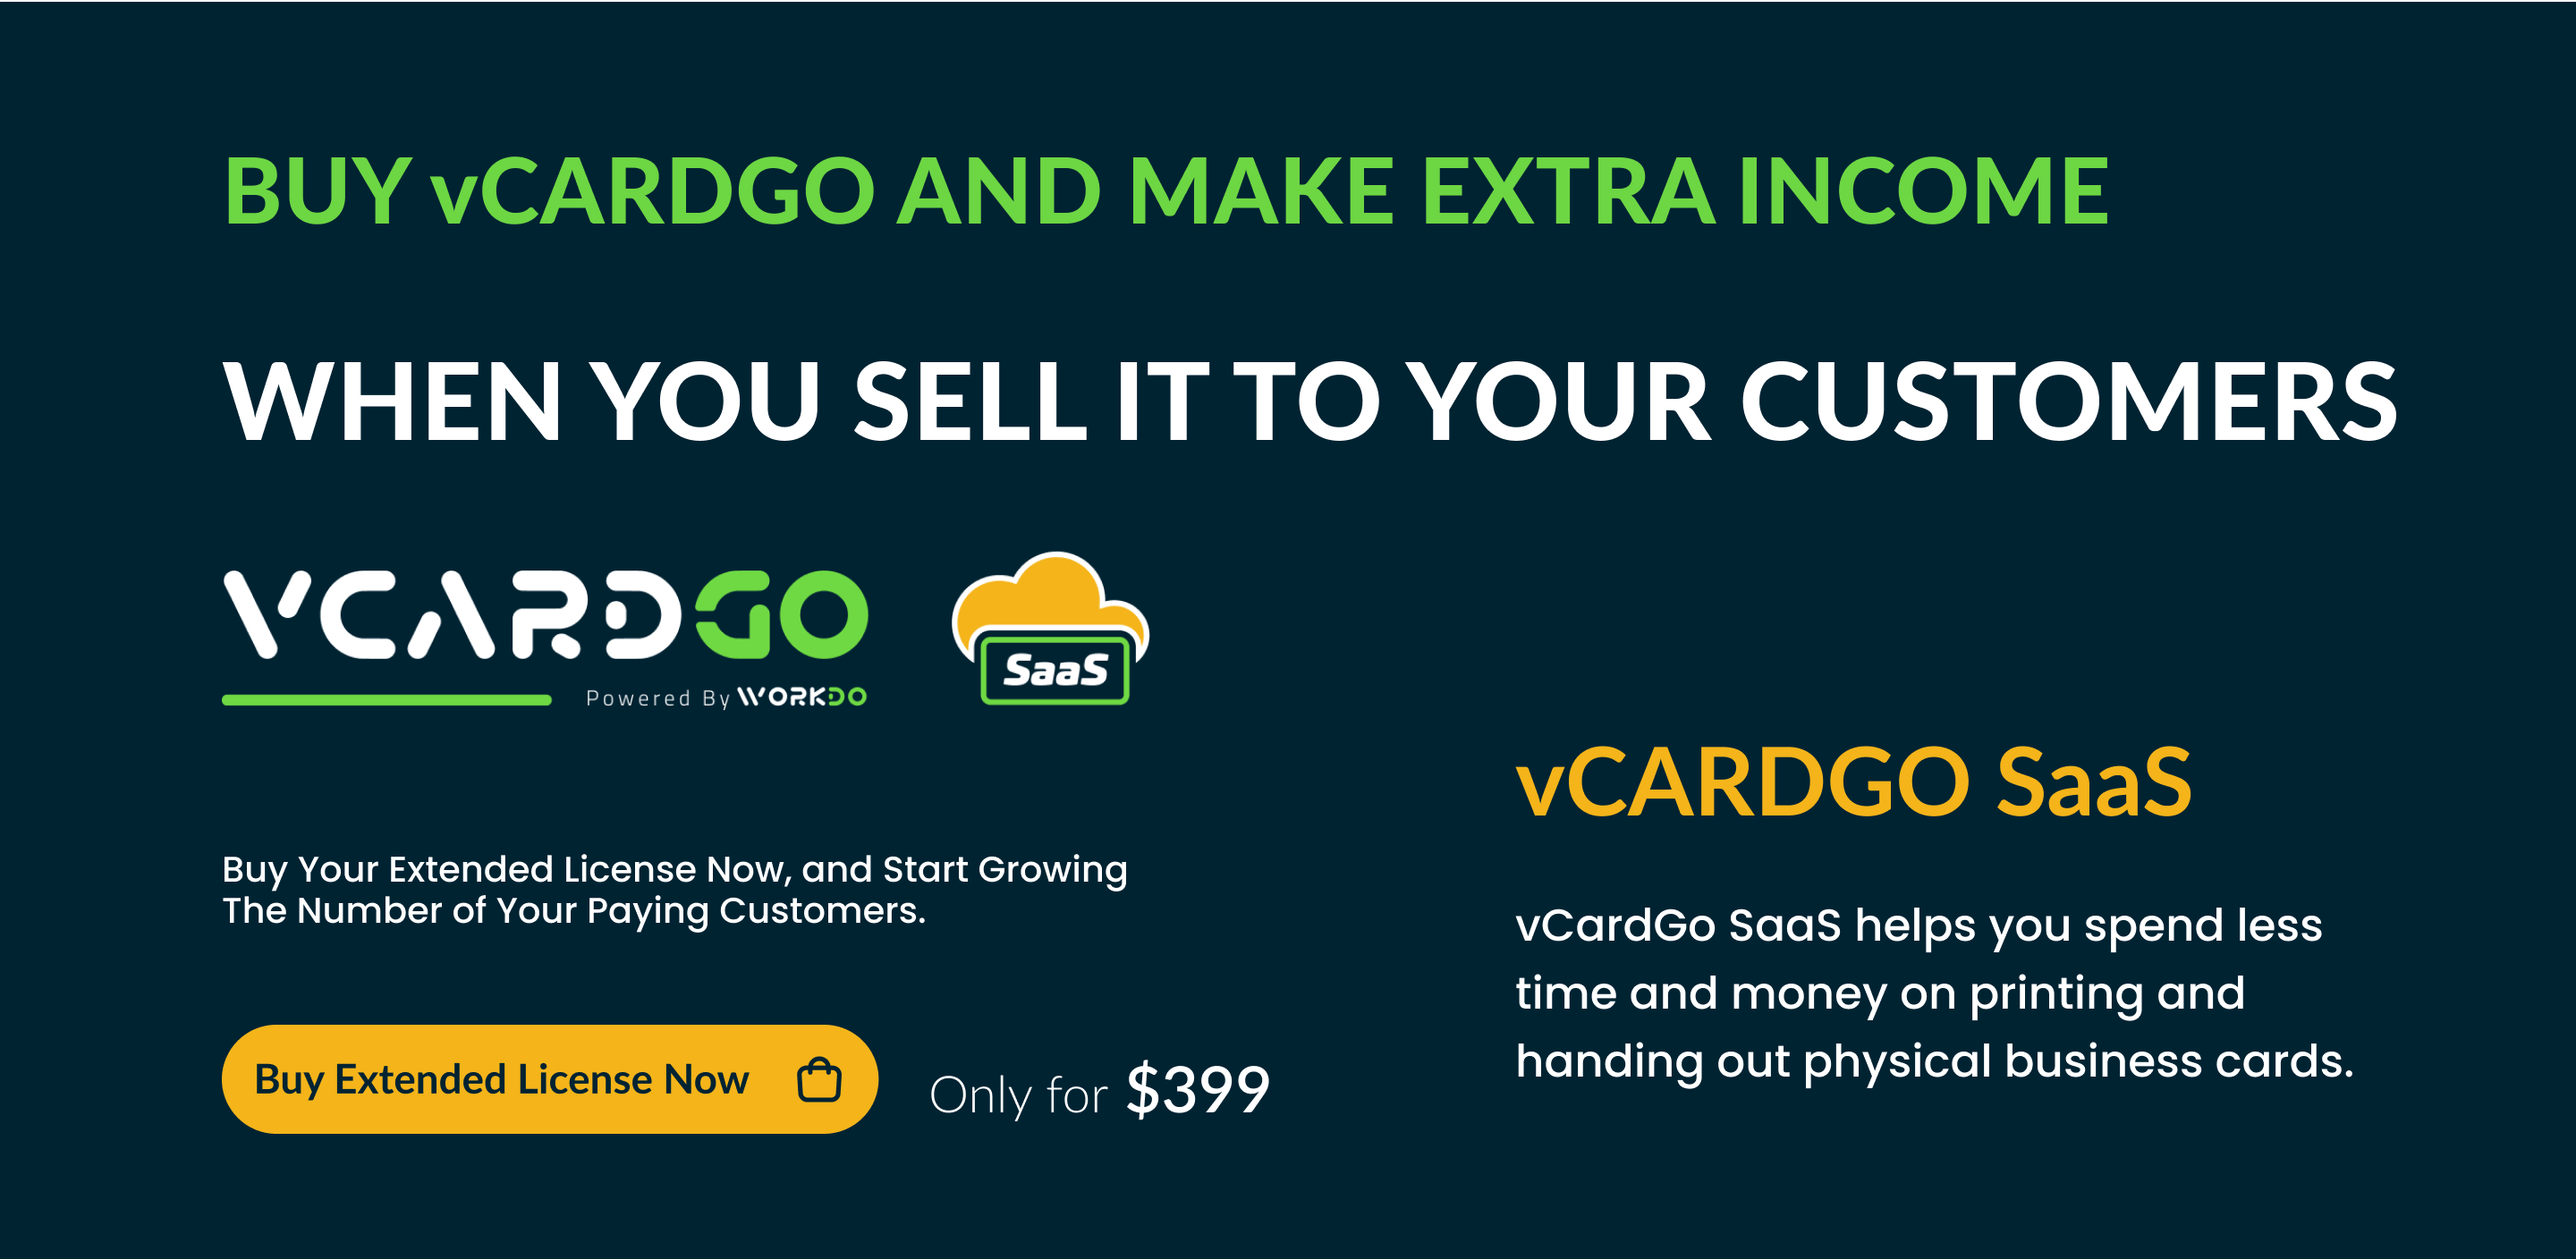 vCardGo SaaS - Digital Business Card Builder - 12